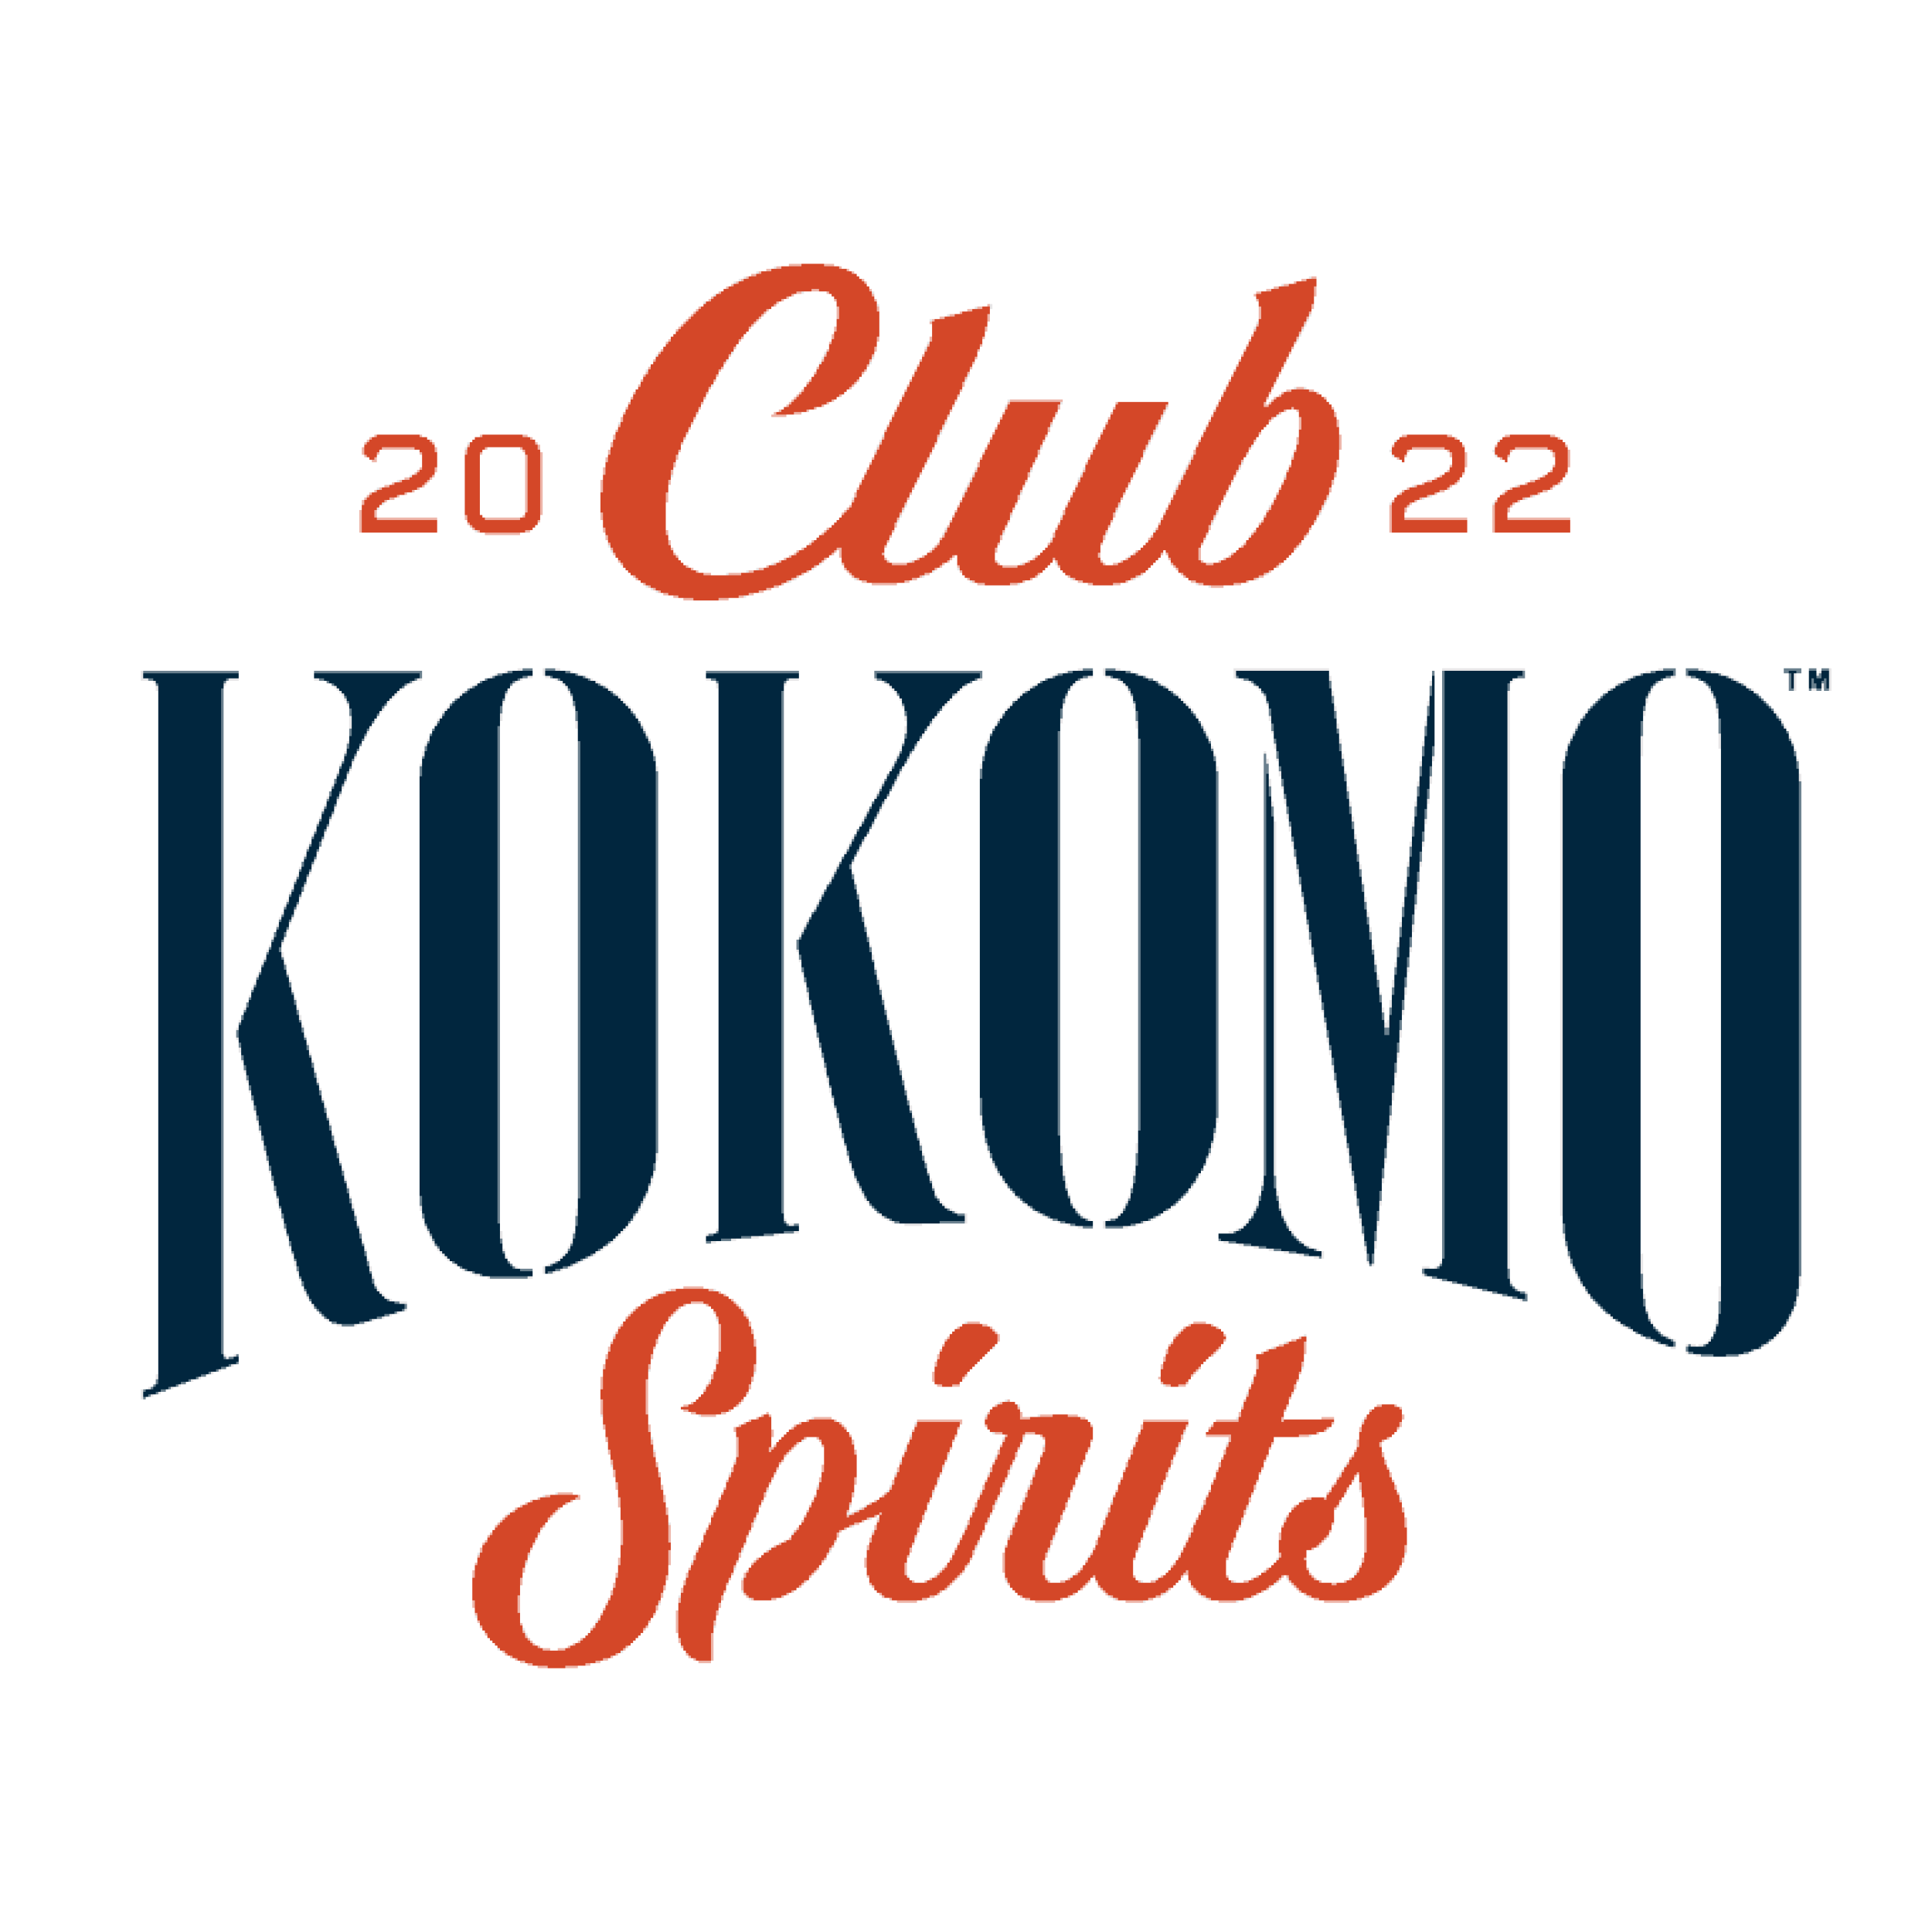 Club Kokomo Spirits